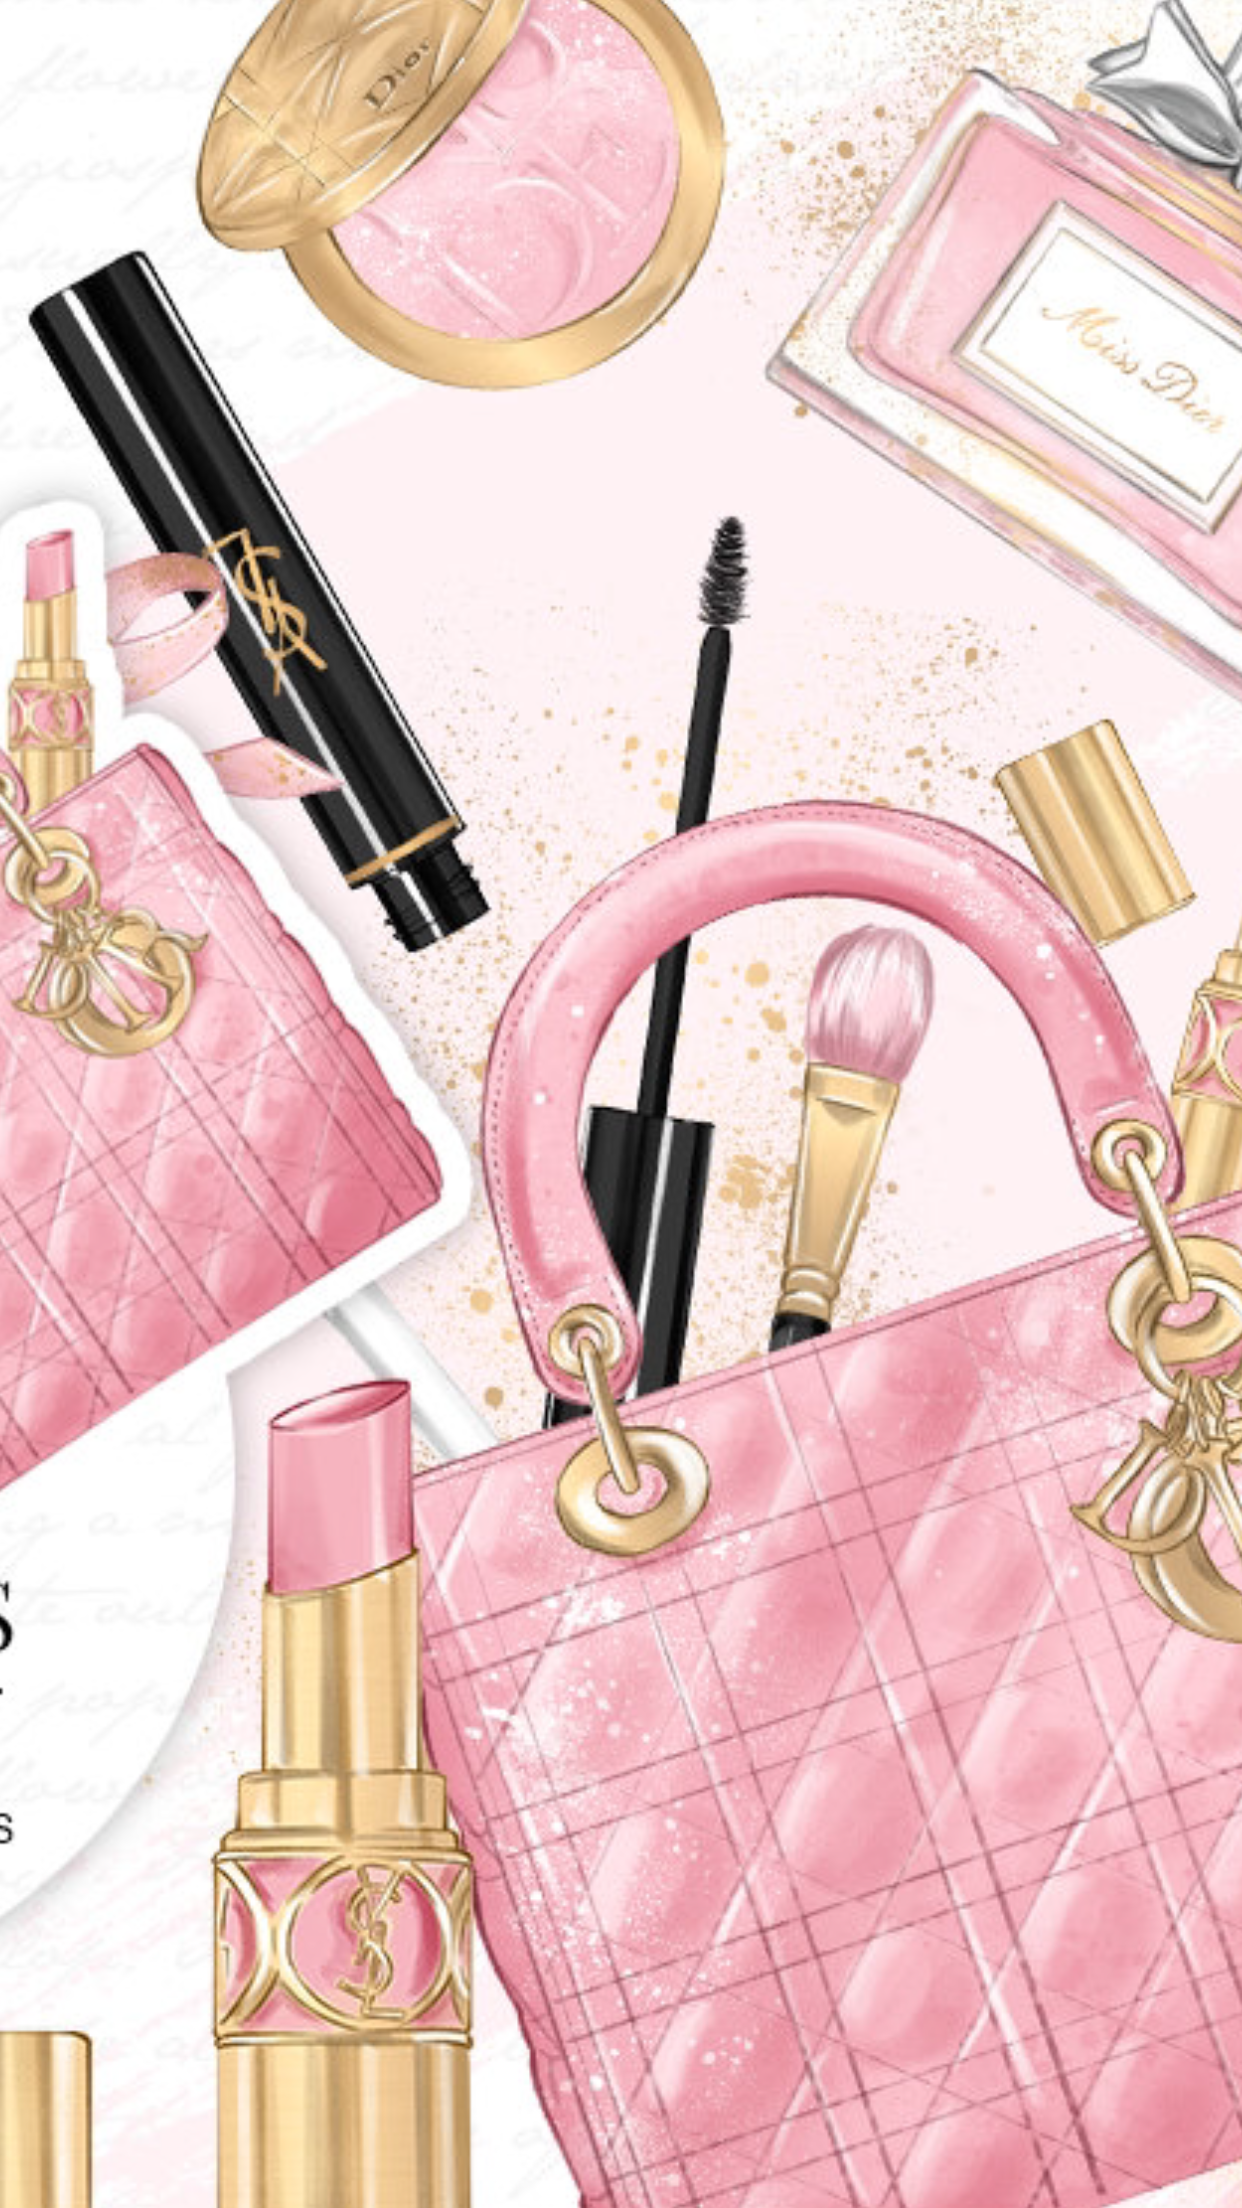 make up wallpaper iphone,rosa,handtasche,schönheit,tasche,parfüm